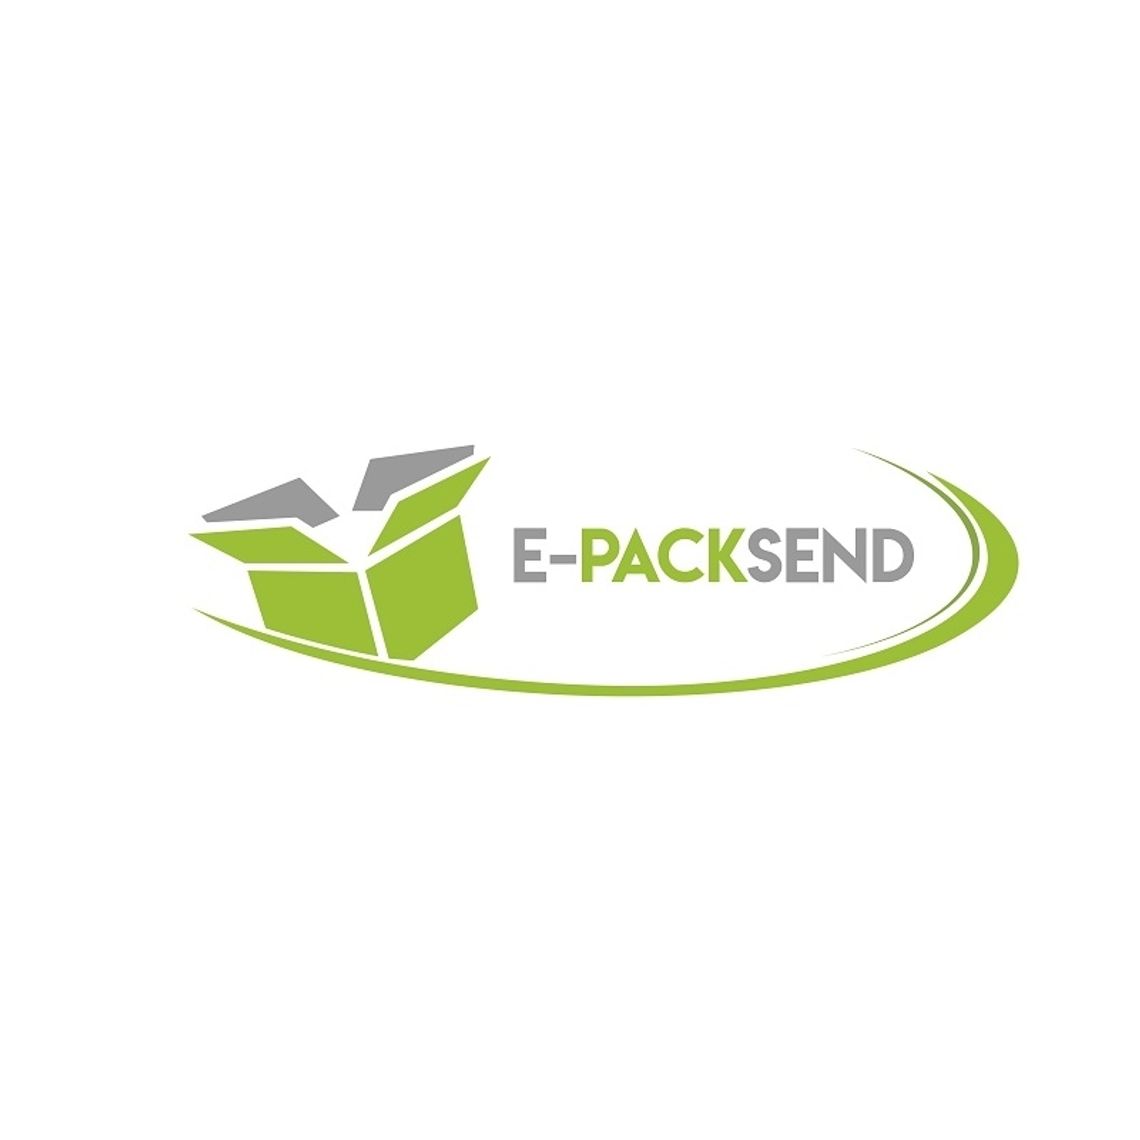 E-packsend - usługi logistyczne dla e-commerce 